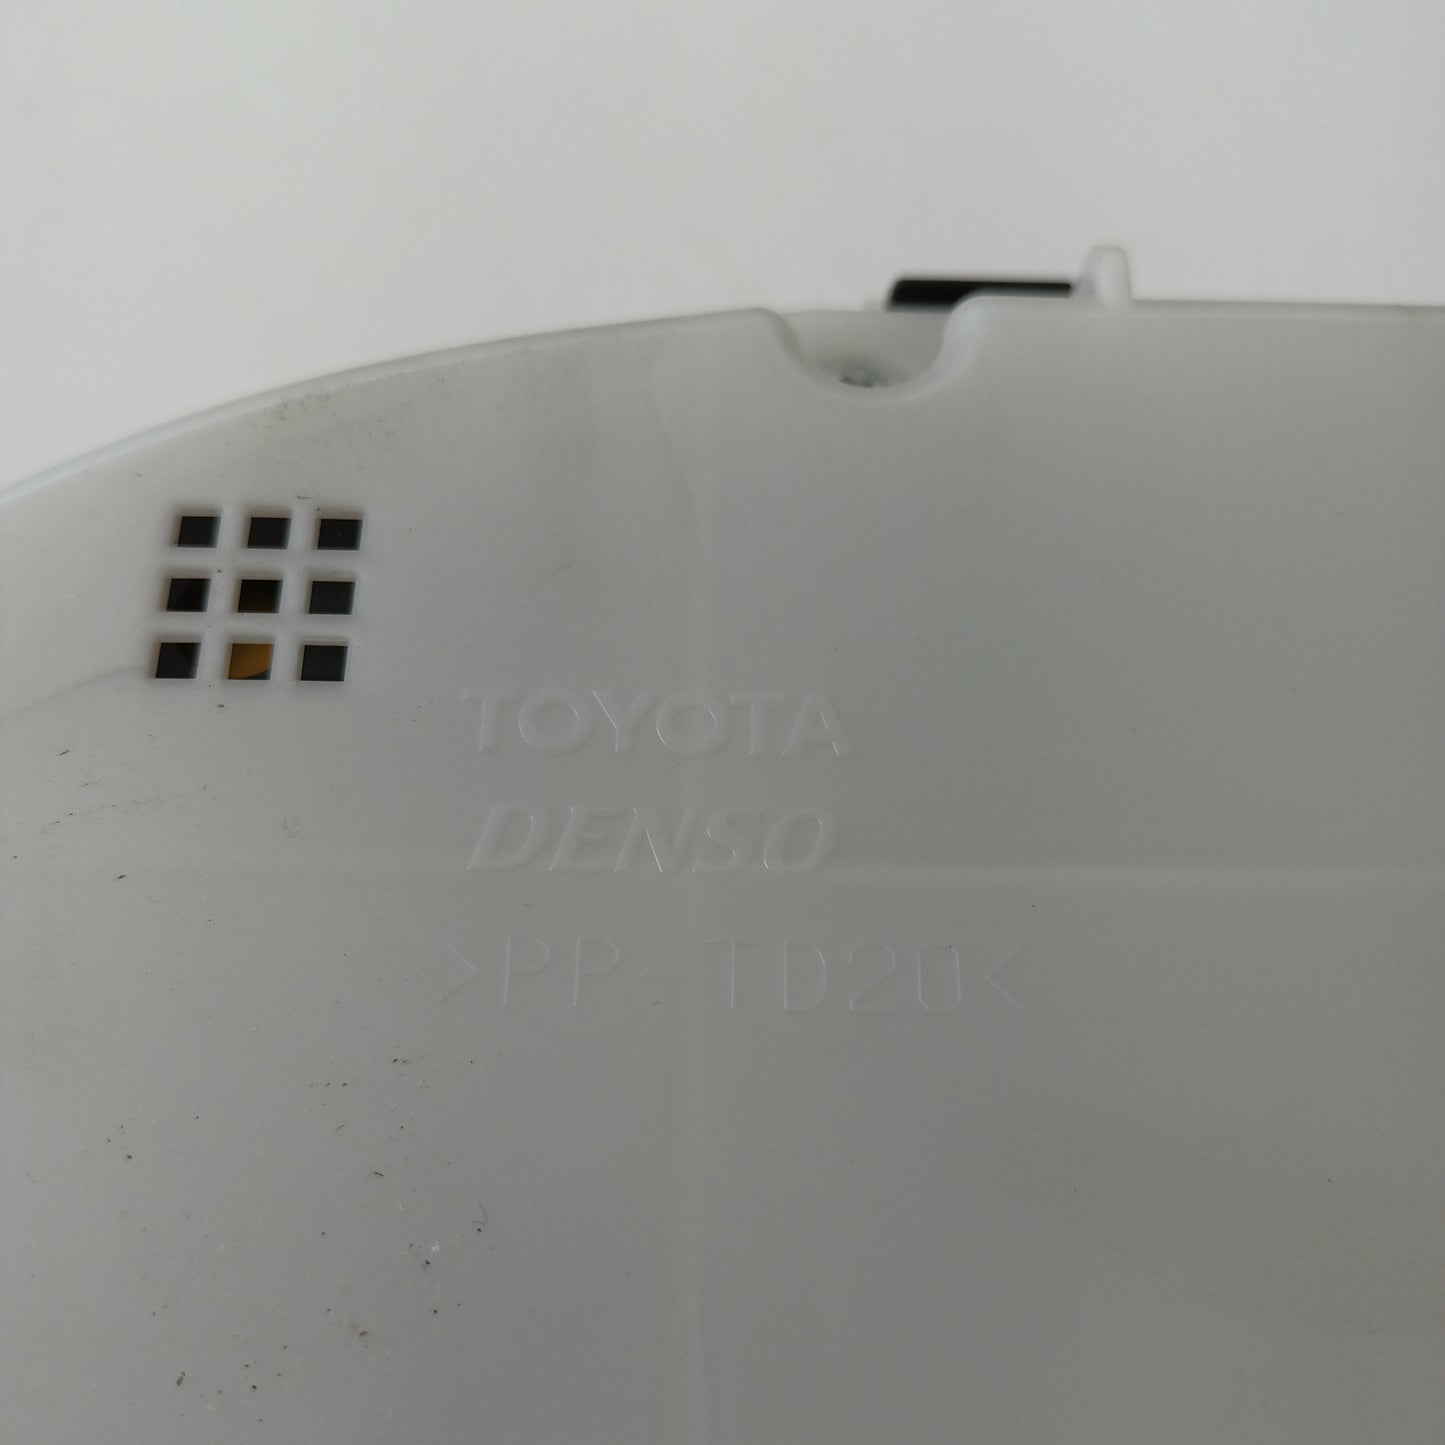 Toyota Yaris Sedan Instrument Cluster 2009 2010 2011 2012 2013 2014 69100km